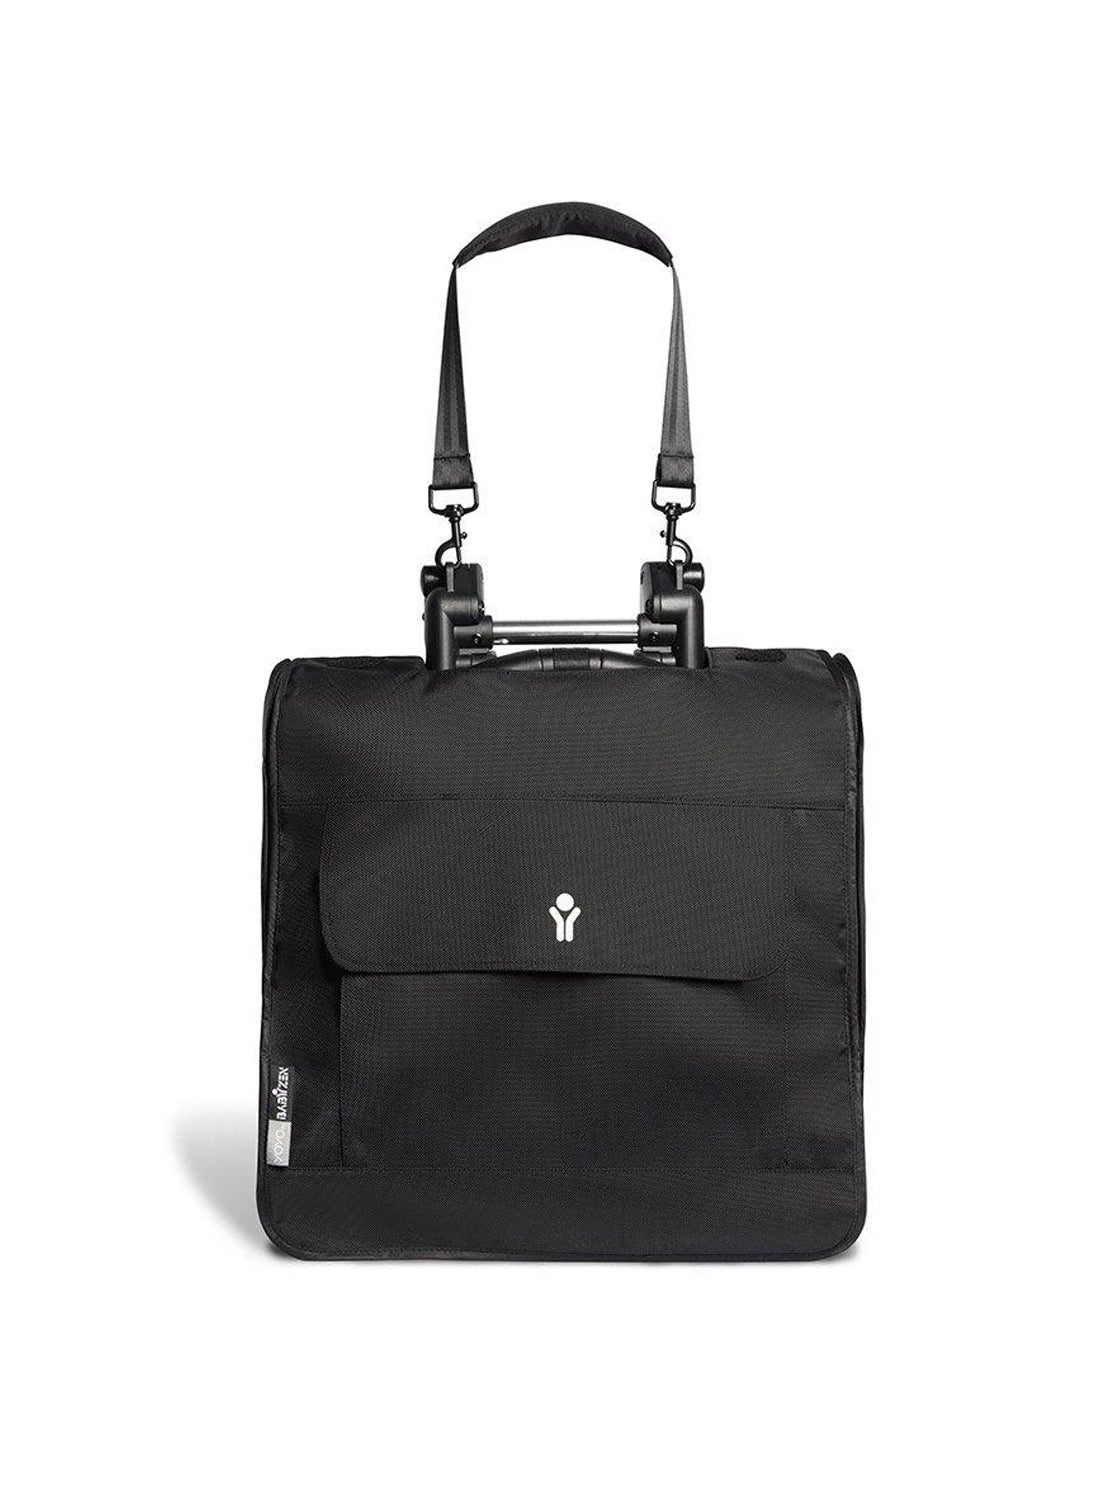 BABYZEN YOYO Travel Bag for Carry Stroller - ANB Baby -$50 - $75